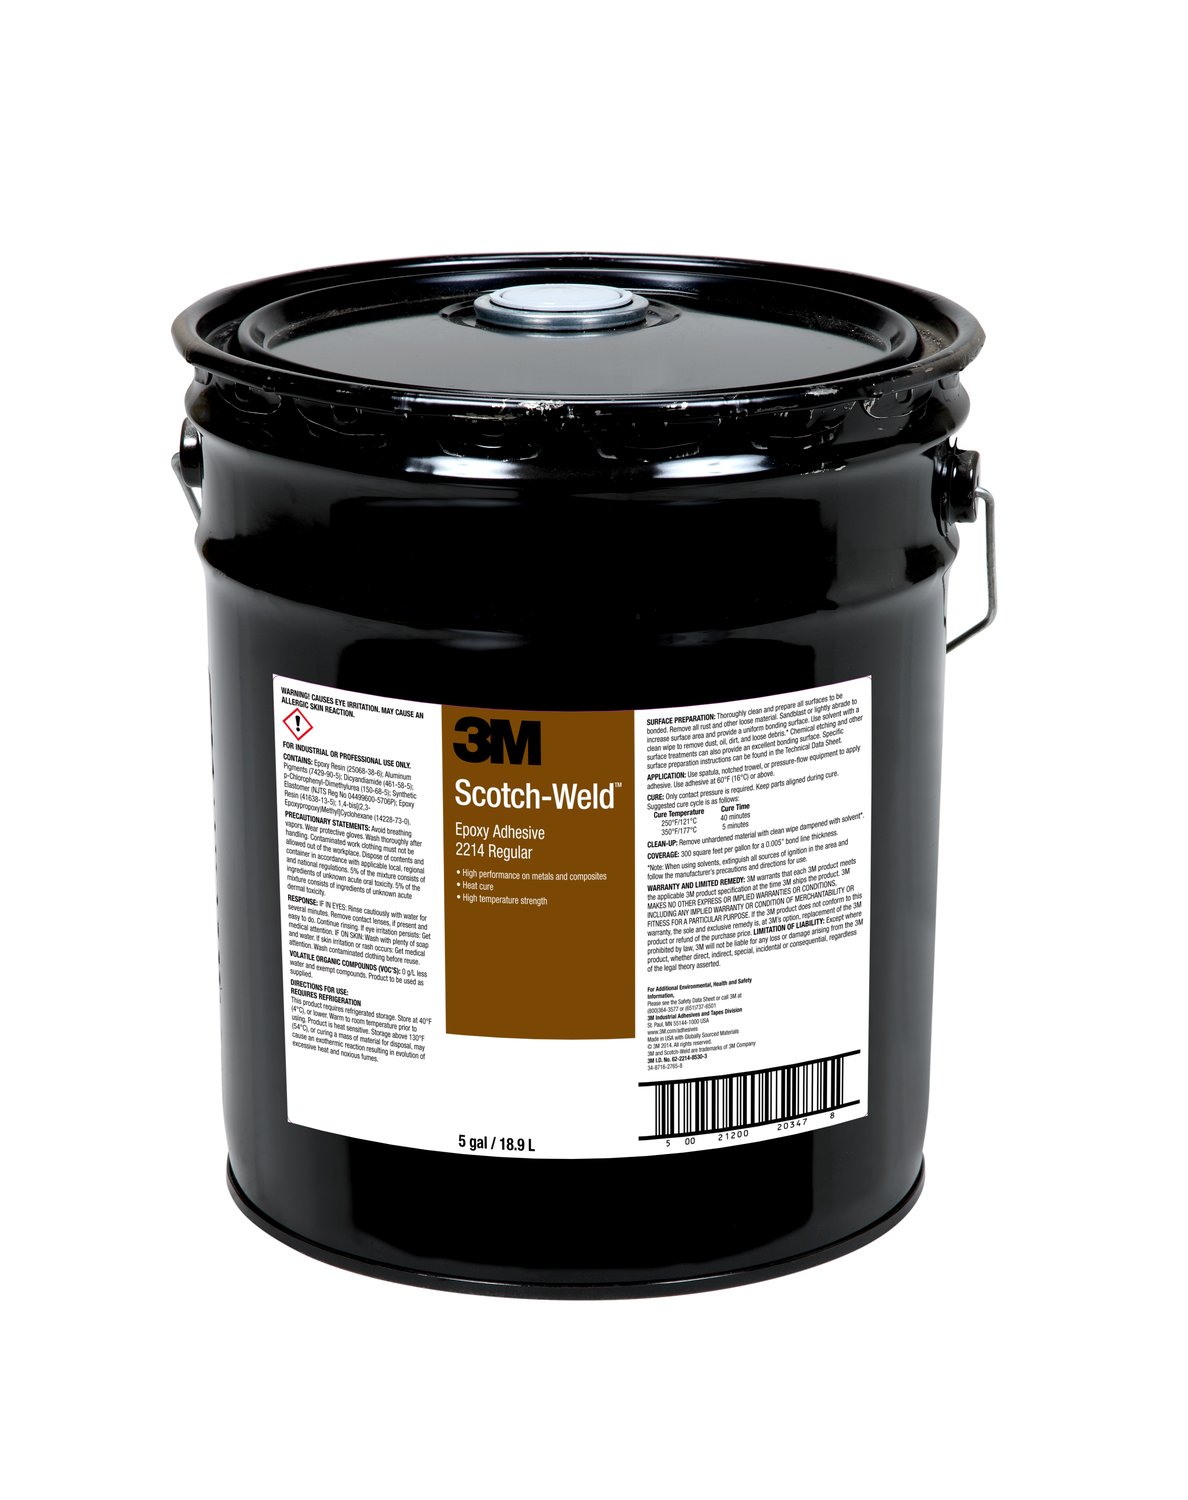 7100111206 - 3M Scotch-Weld Epoxy Adhesive 2214, Regular, Gray, 5 Gallon (Pail),
Drum